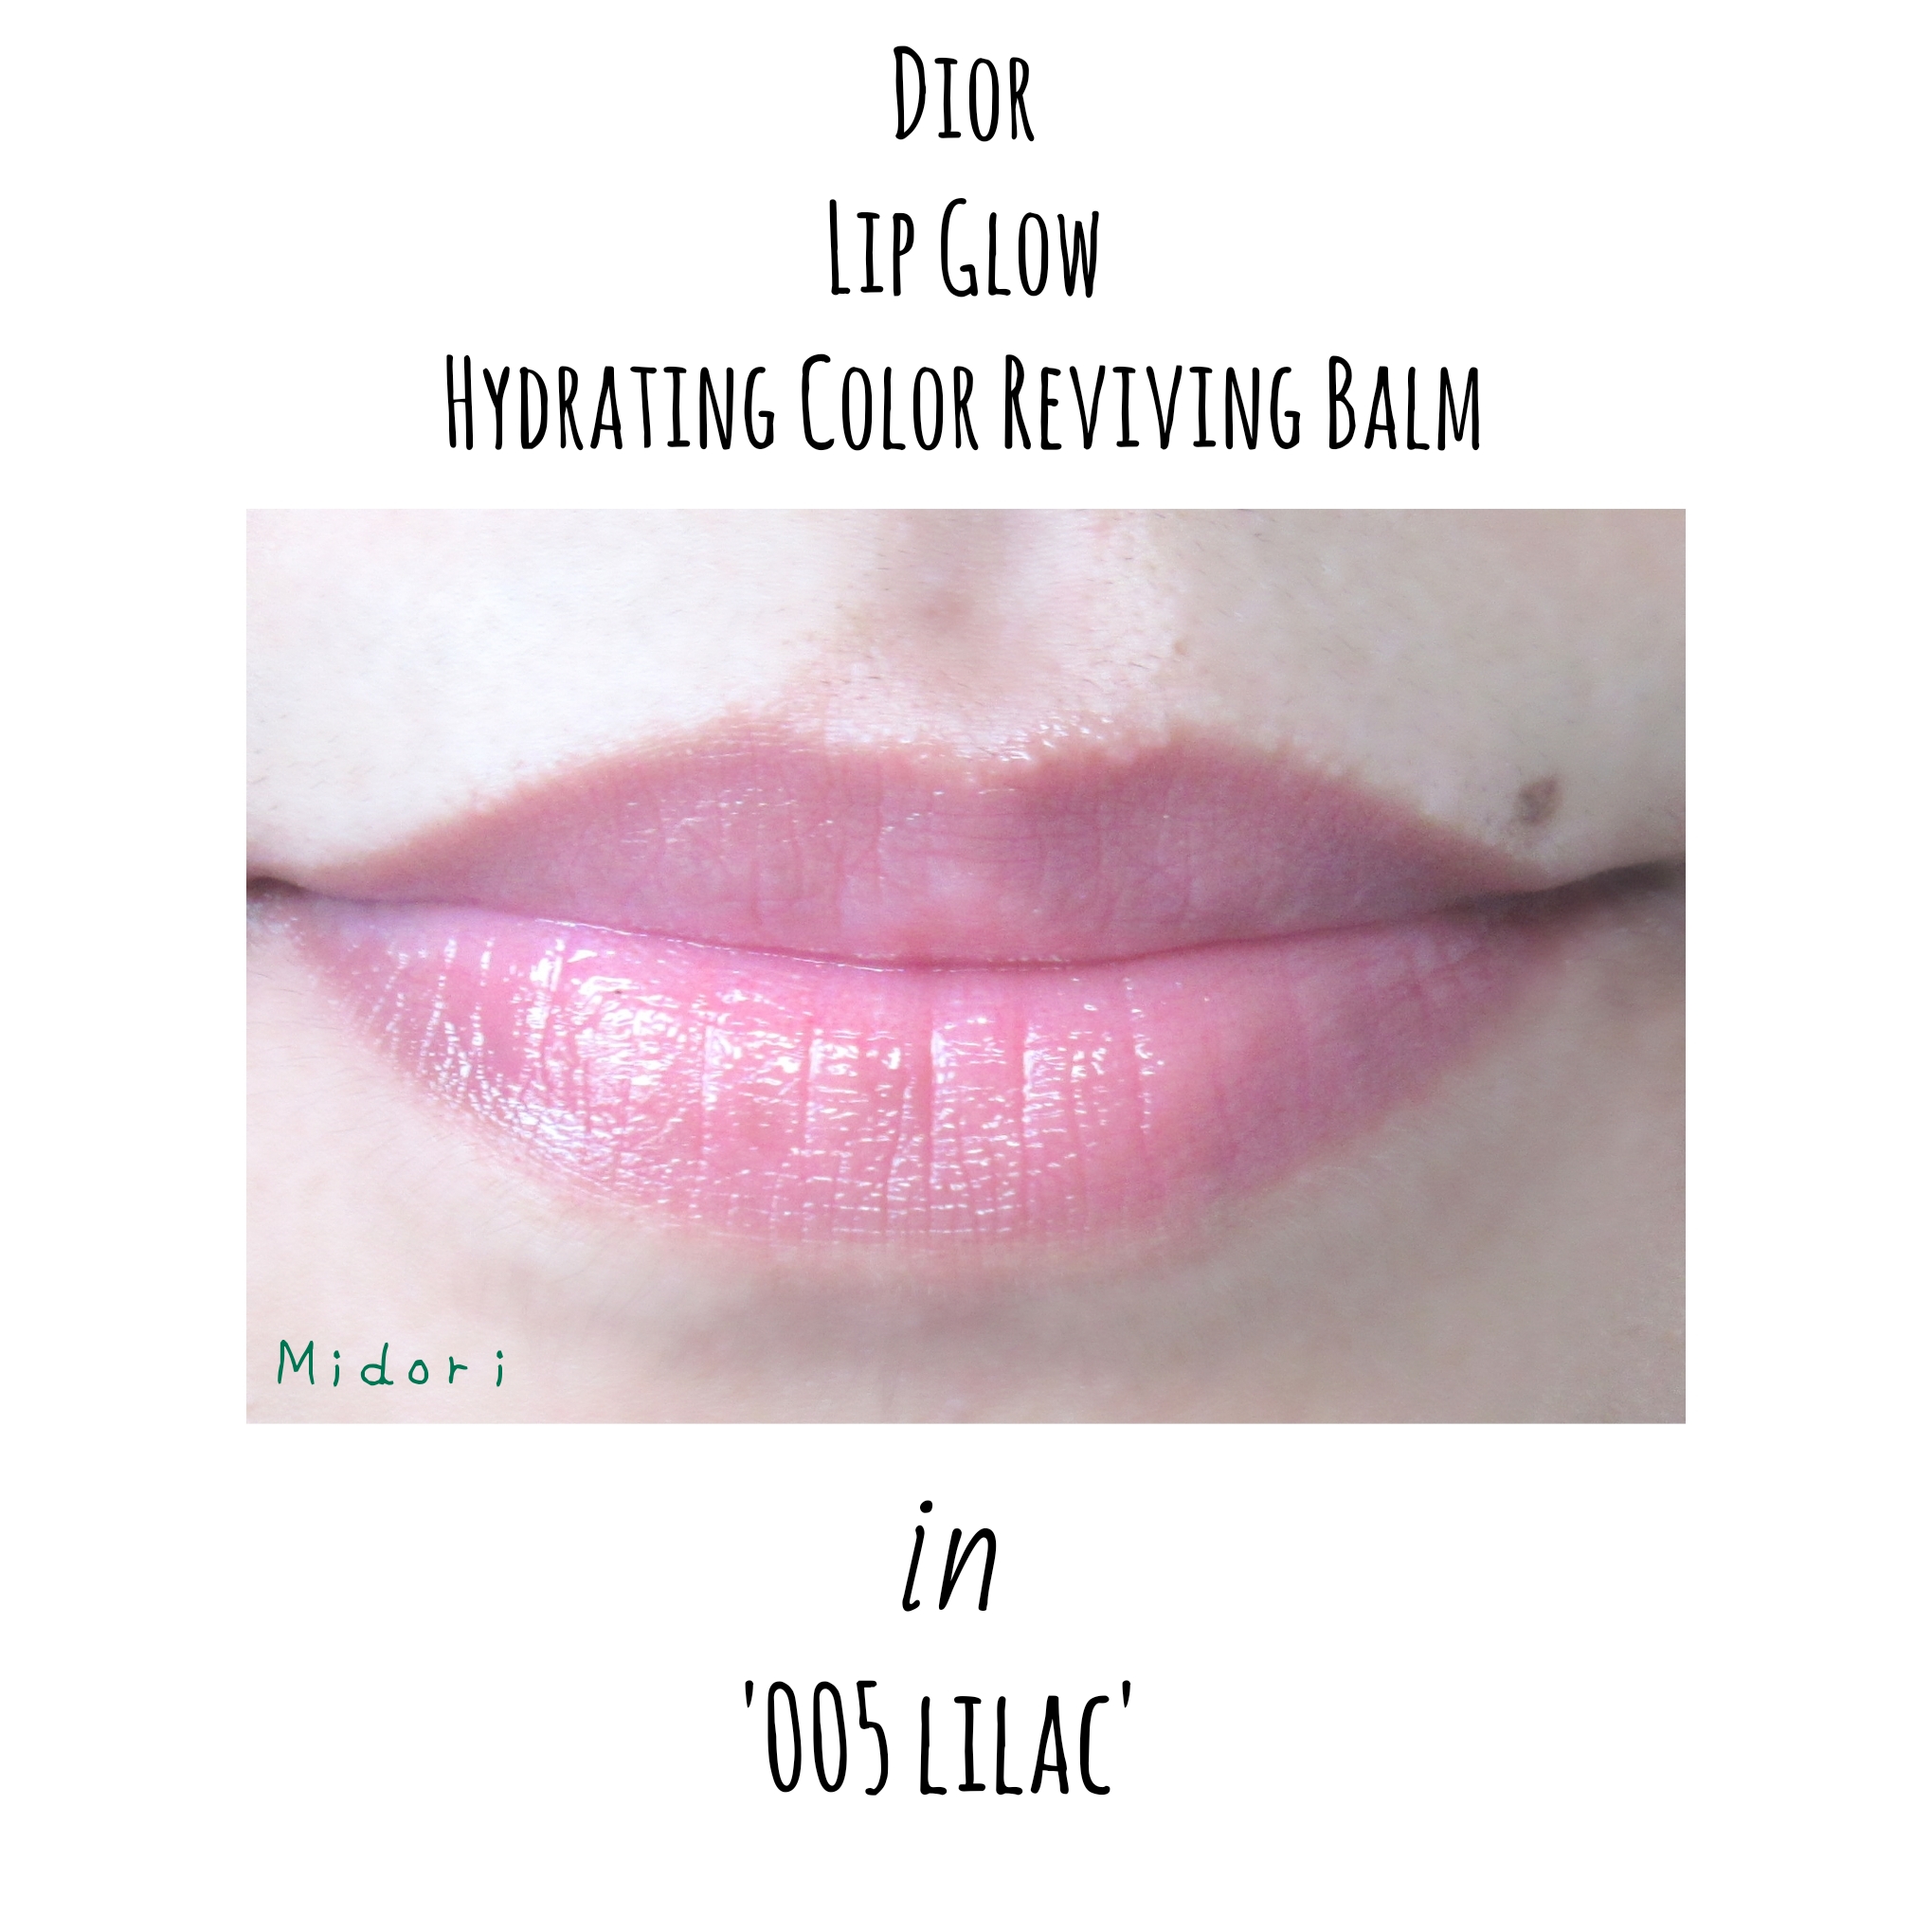 dior lip glow lilac review